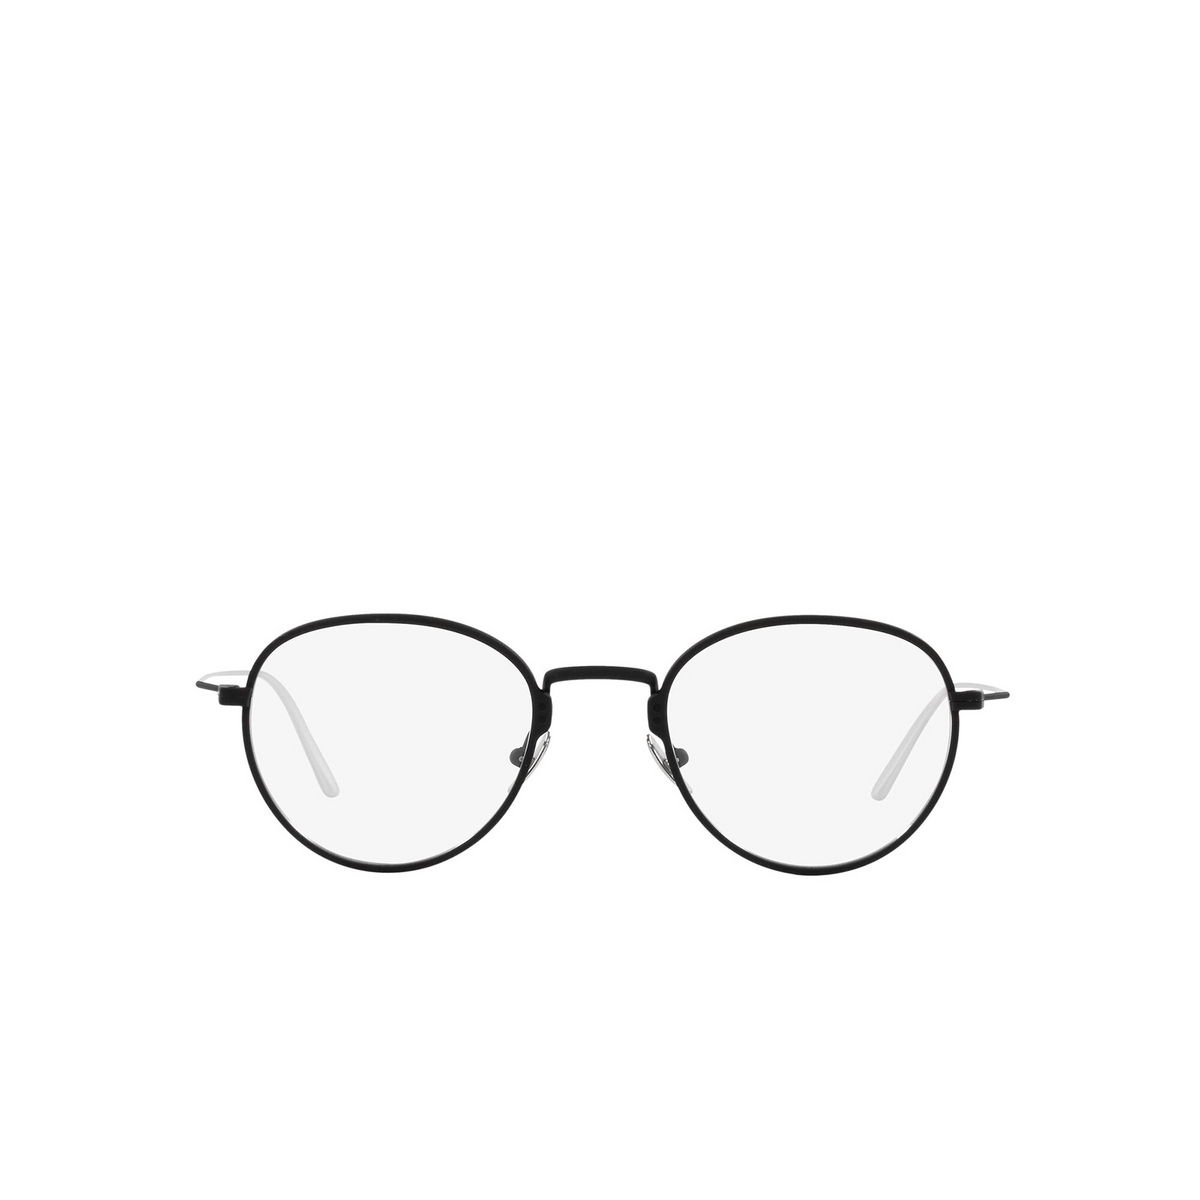 Prada® Oval Eyeglasses: PR 50YV color Matte Black 04Q1O1 - front view.